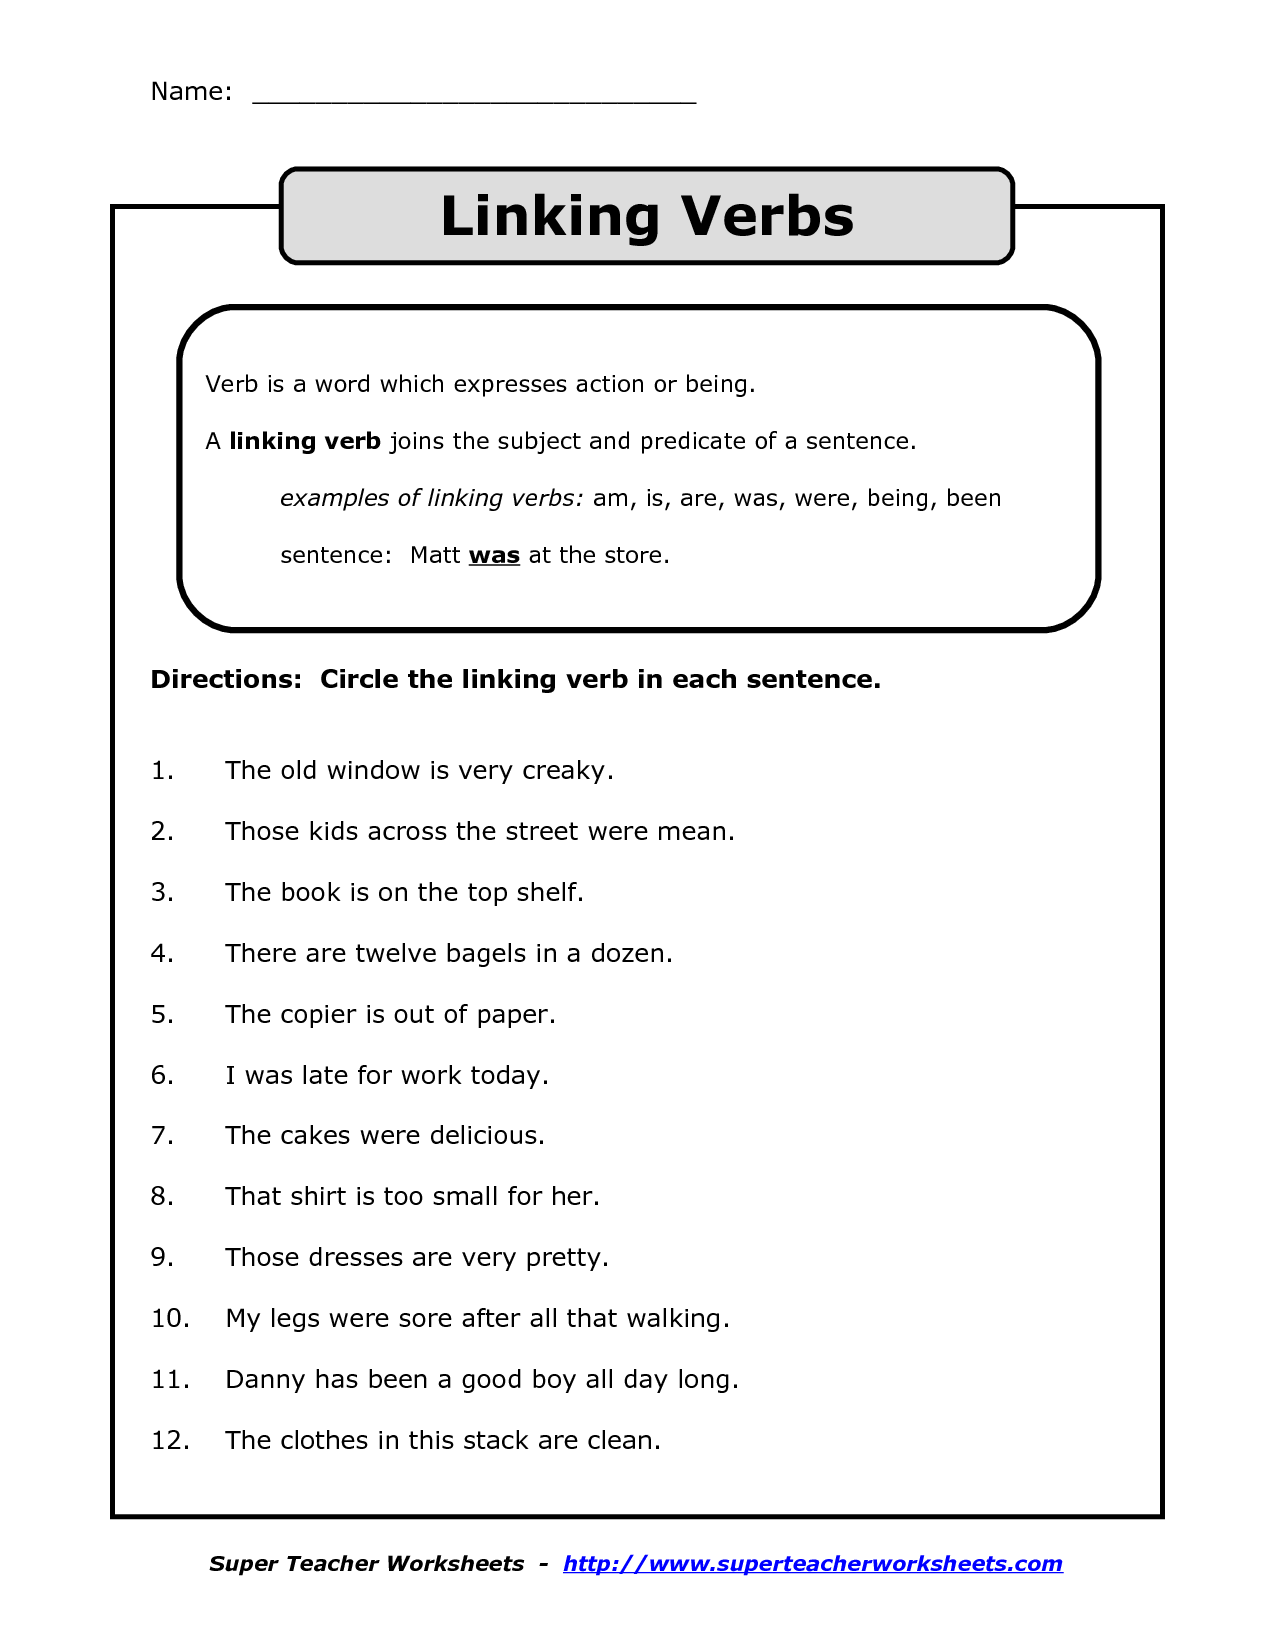 Linking Verbs Worksheet For First Grade